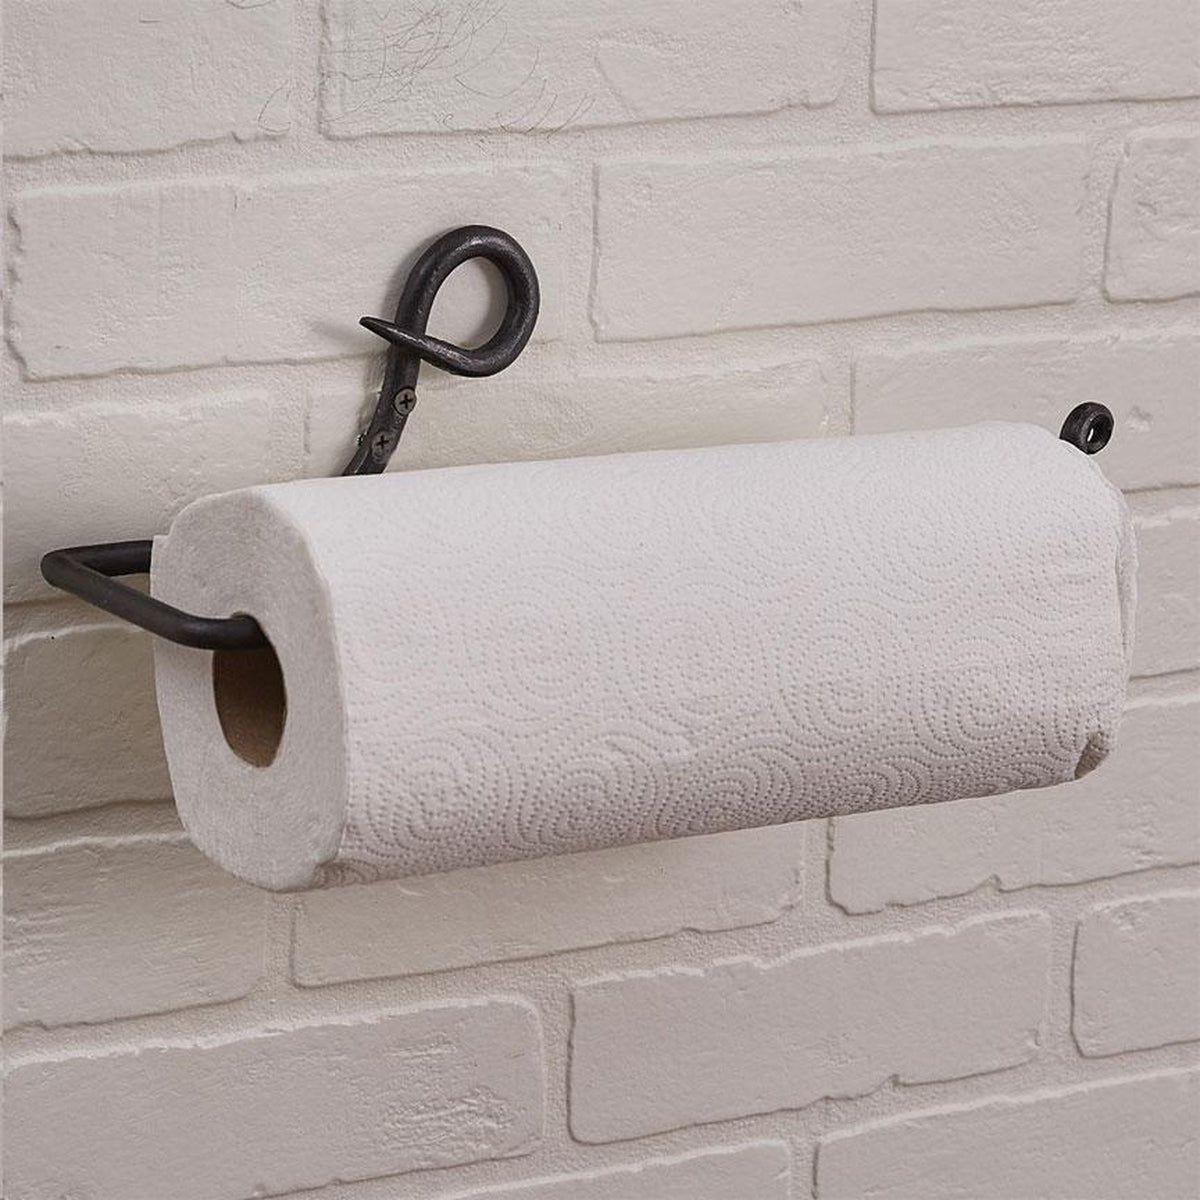 RTZEN Stylish Wall Paper Towel Holder | Black Decorative Wrought Iron Hanger | Wall Mount Fancy Paper Dispenser | Rod Metal Durable